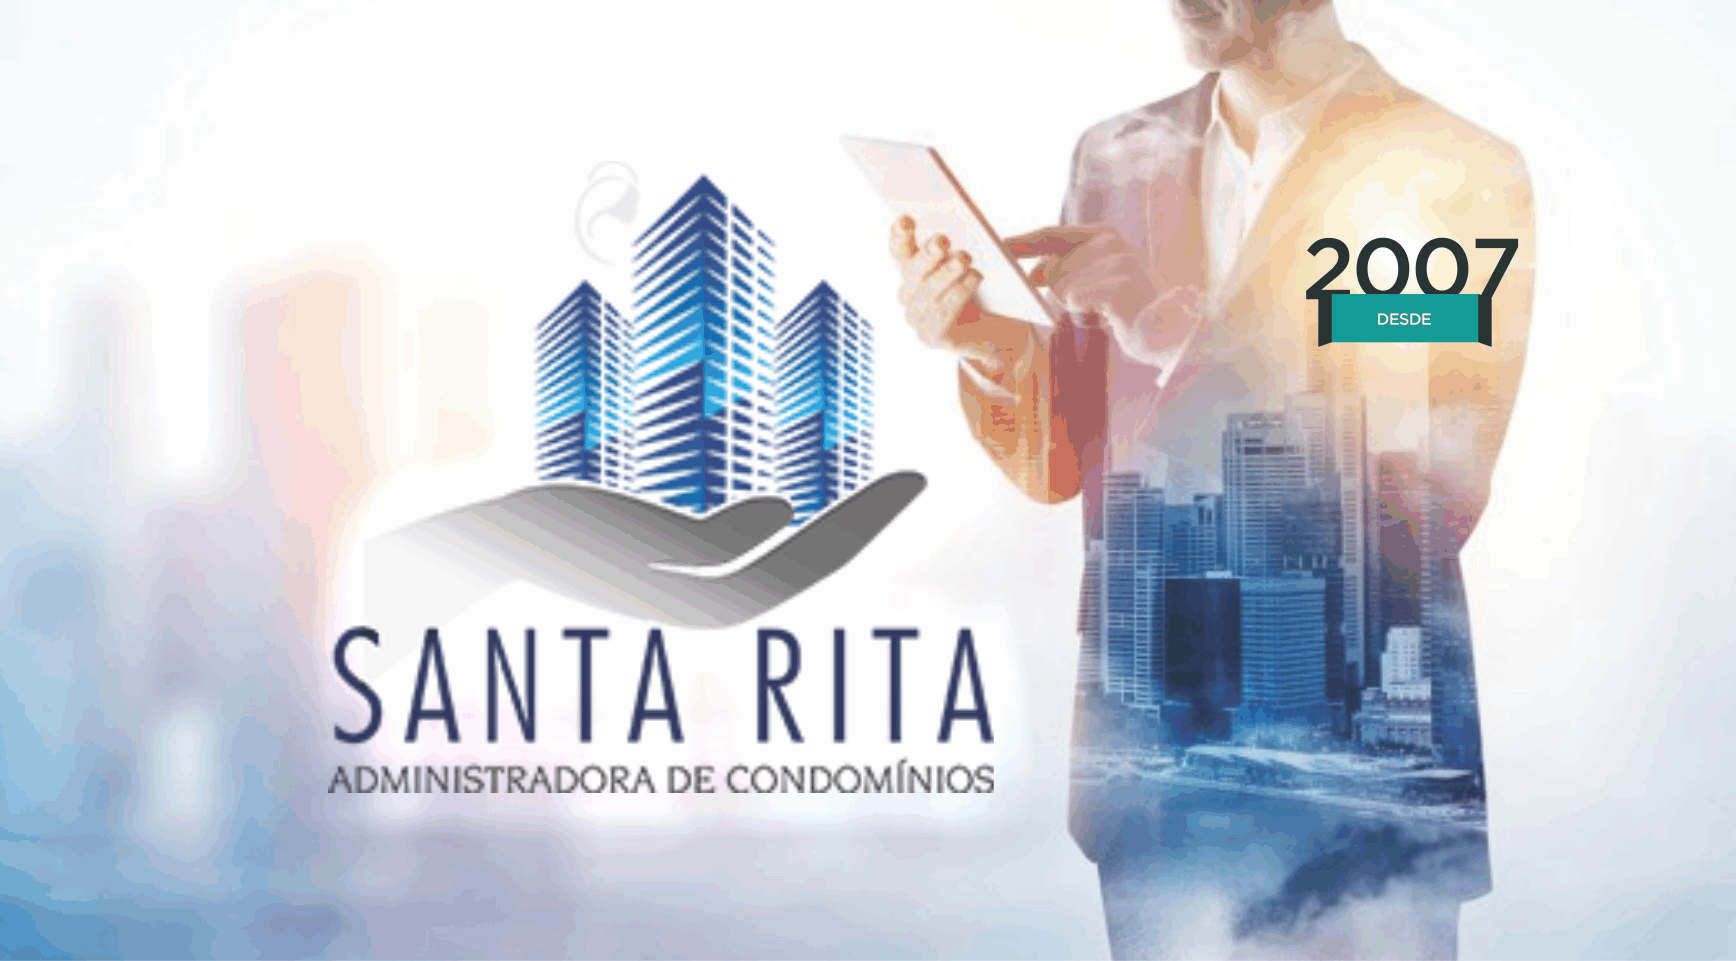  Santa Rita Administradora de Condomínios      RUA ONZE DE JUNHO, 303, PINHAIS - PR  Fones: (41) 3059-0304